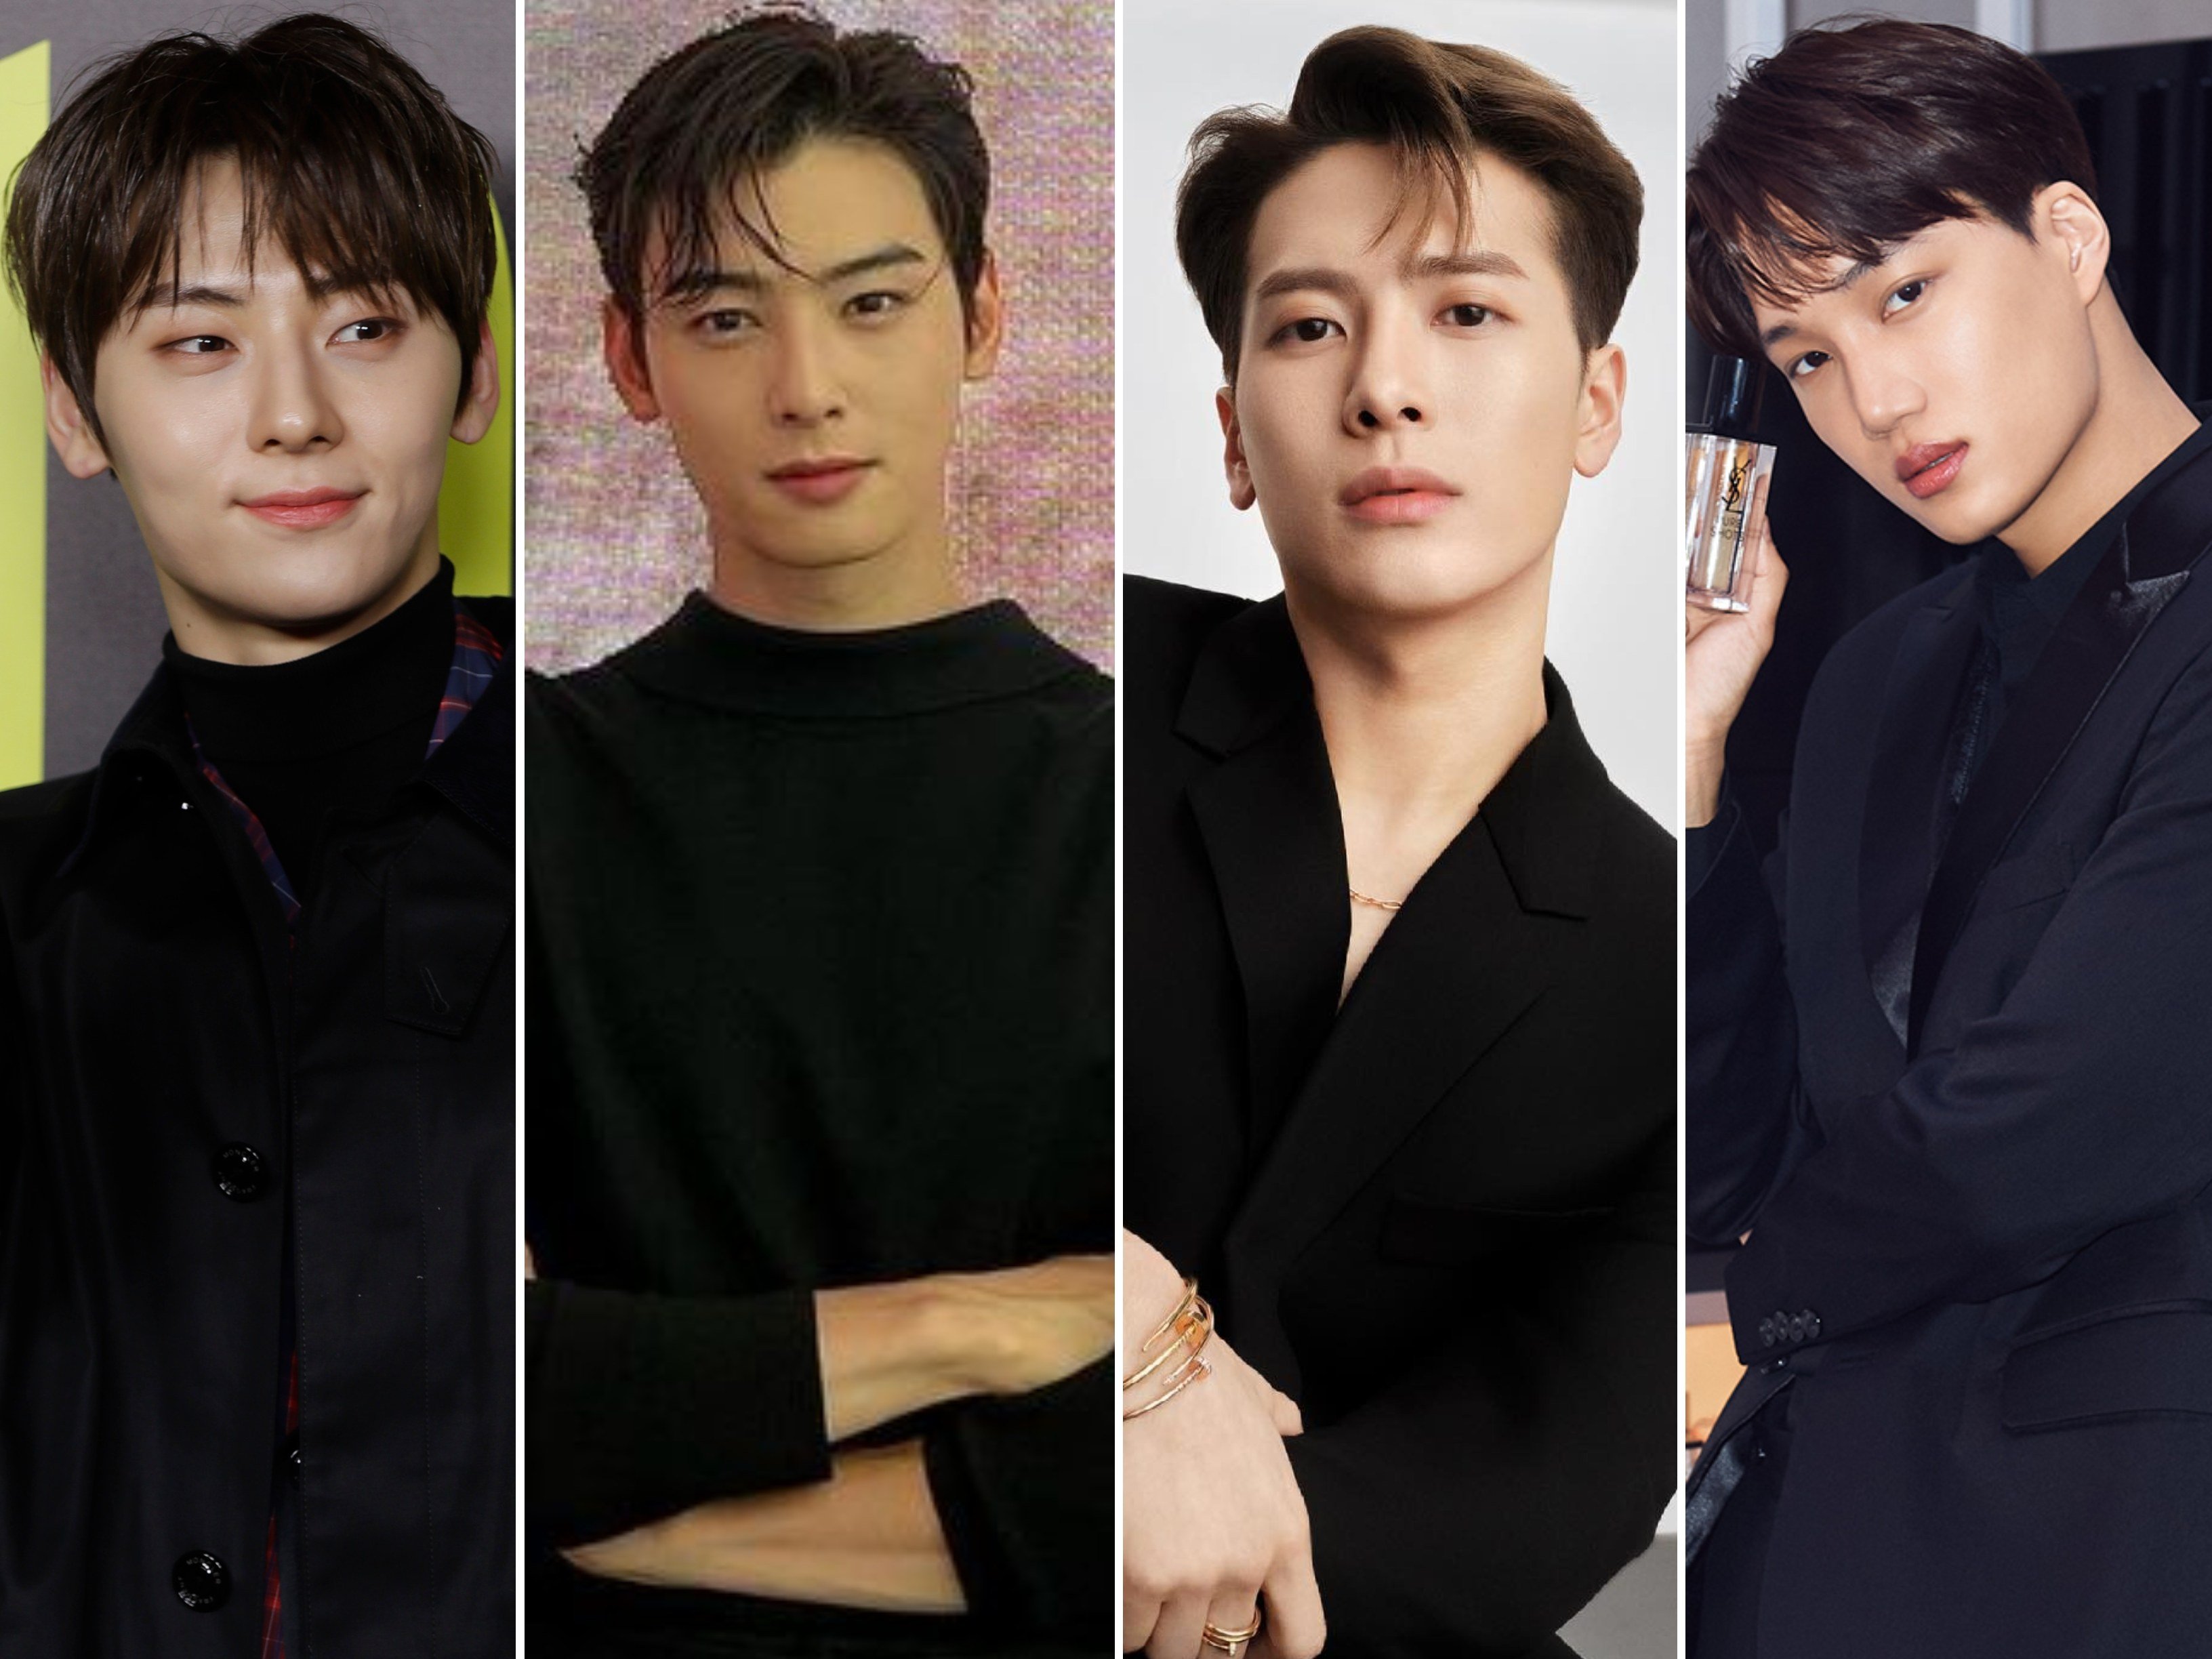 Hwang Min-hyun, Cha Eun-woo, Jackson Wang and Kai are all famous Korean beauty brand ambassadors. Photos: AP; @eunwo.o_c, @jacksonwang852g7, @yslbeauty/Instagram